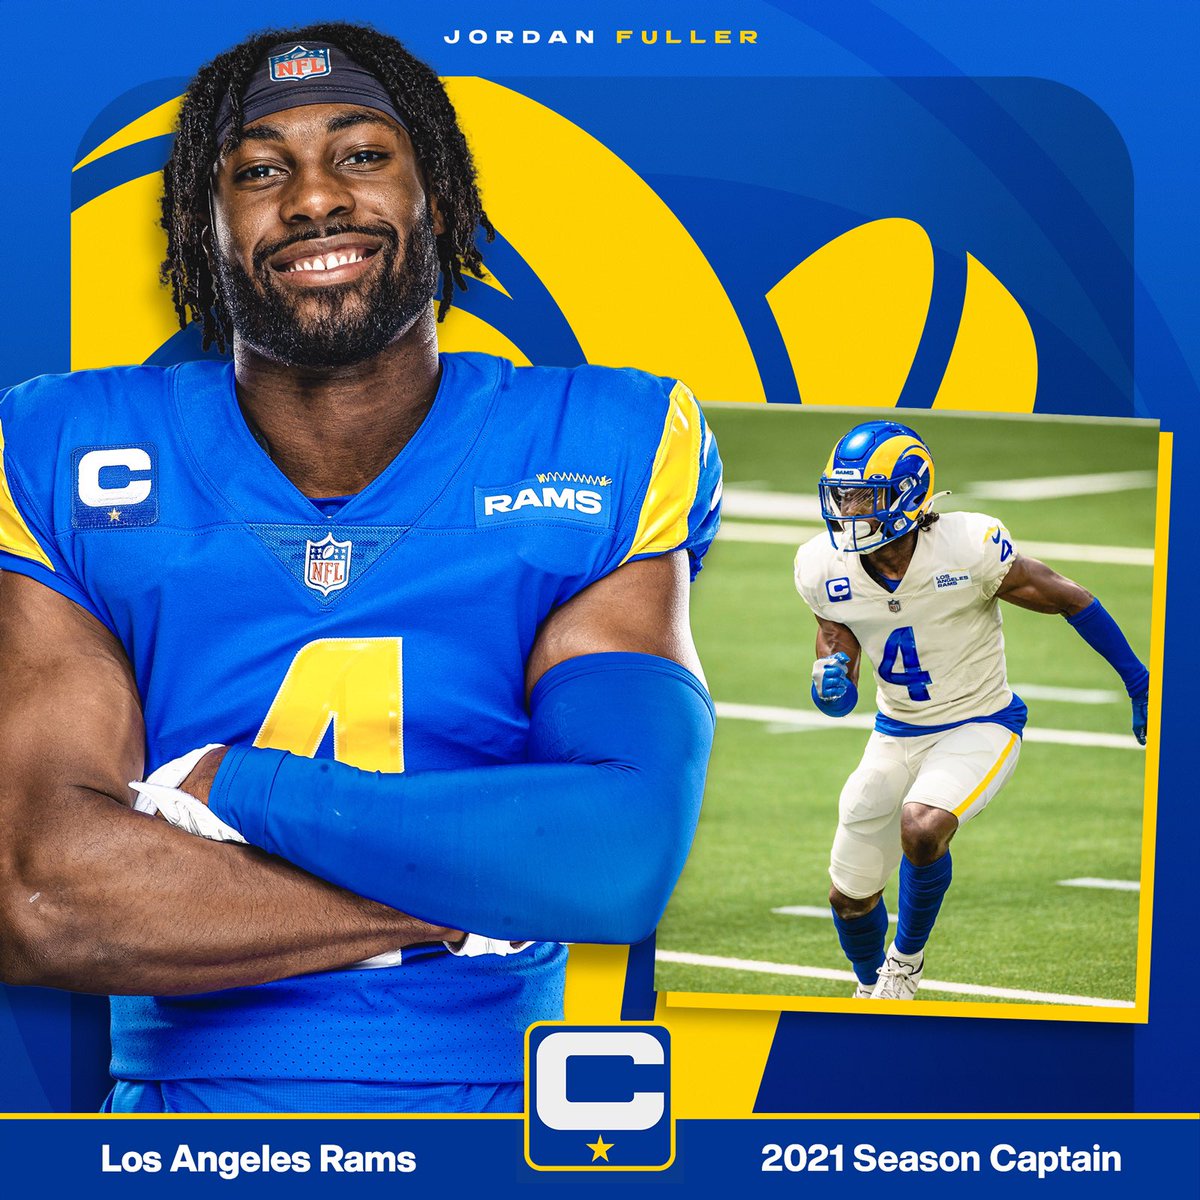 Jordan Fuller - NFL Safety - Los Angeles Rams